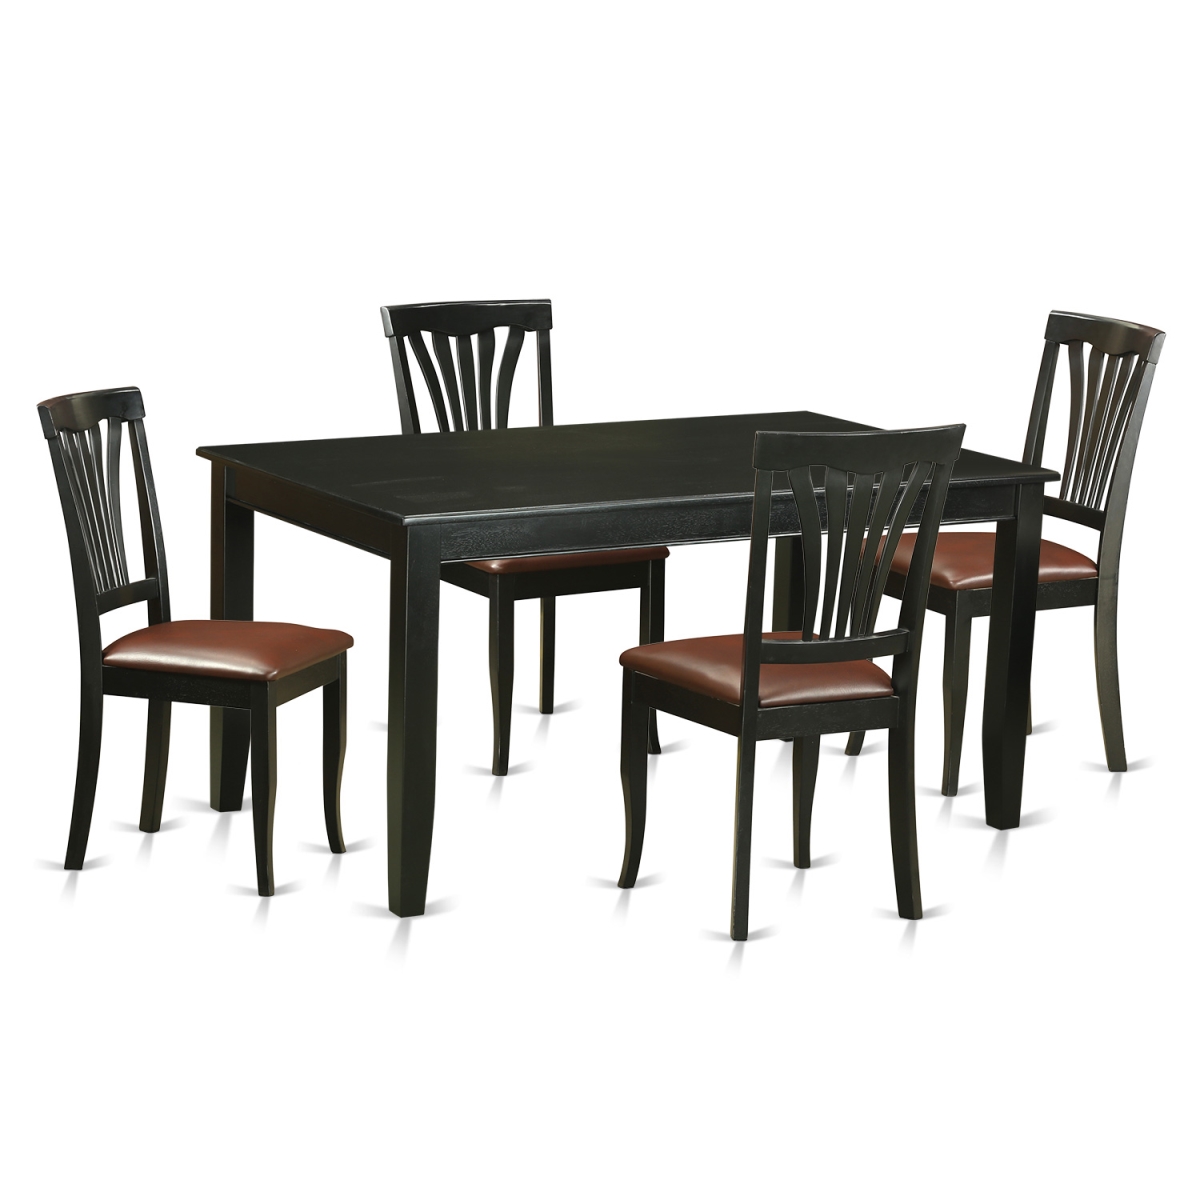 Faux Leather Dinette Set - Kitchen Table & 4 Chairs, Black - 5 Piece